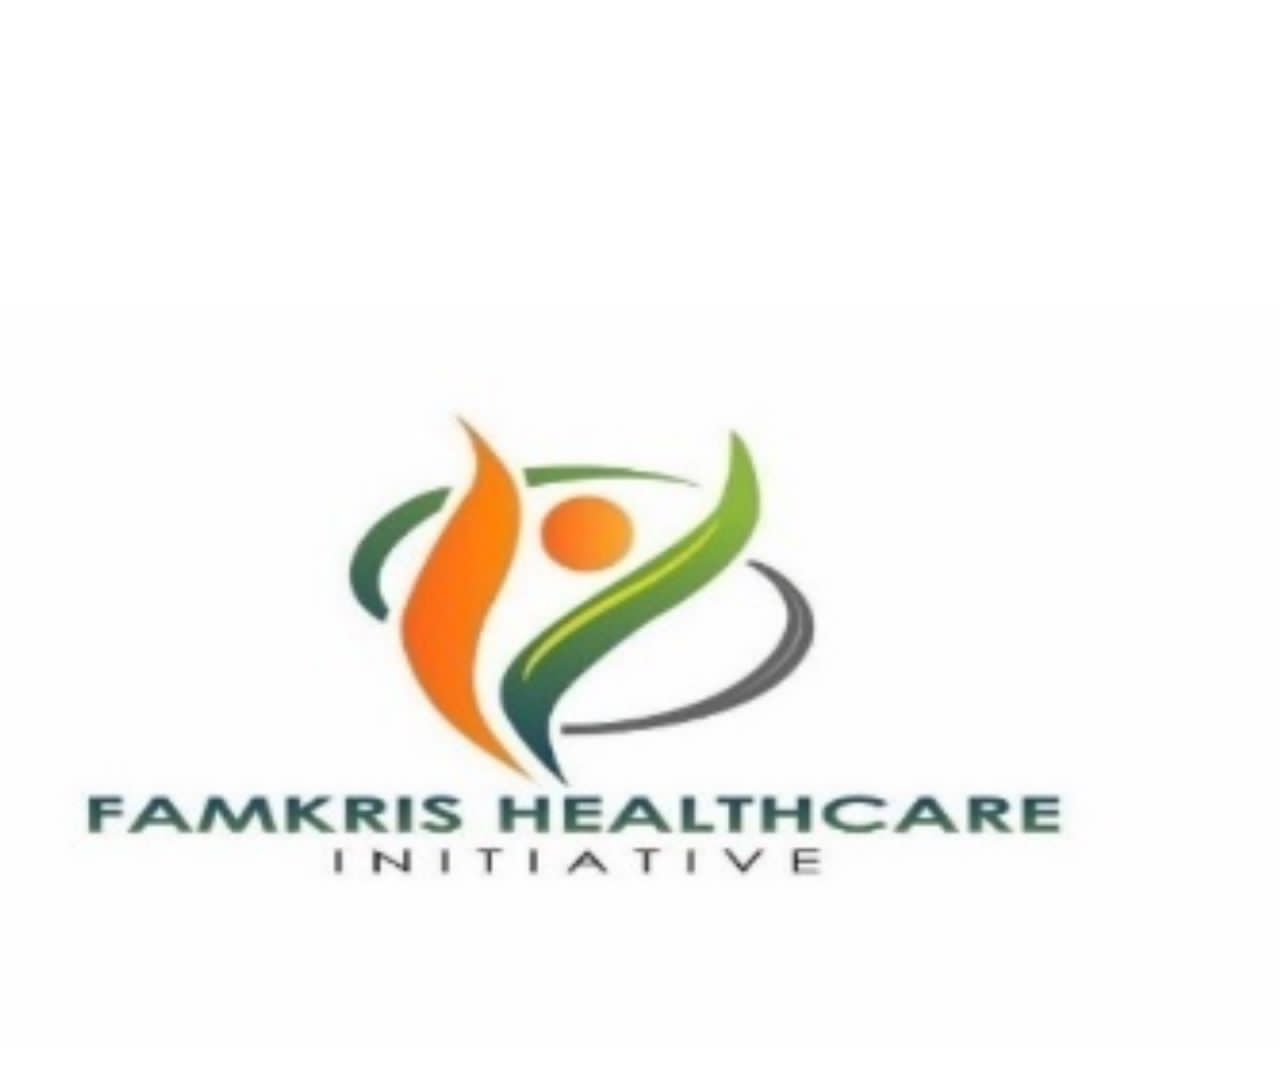 FamKris Healthcare Initiative